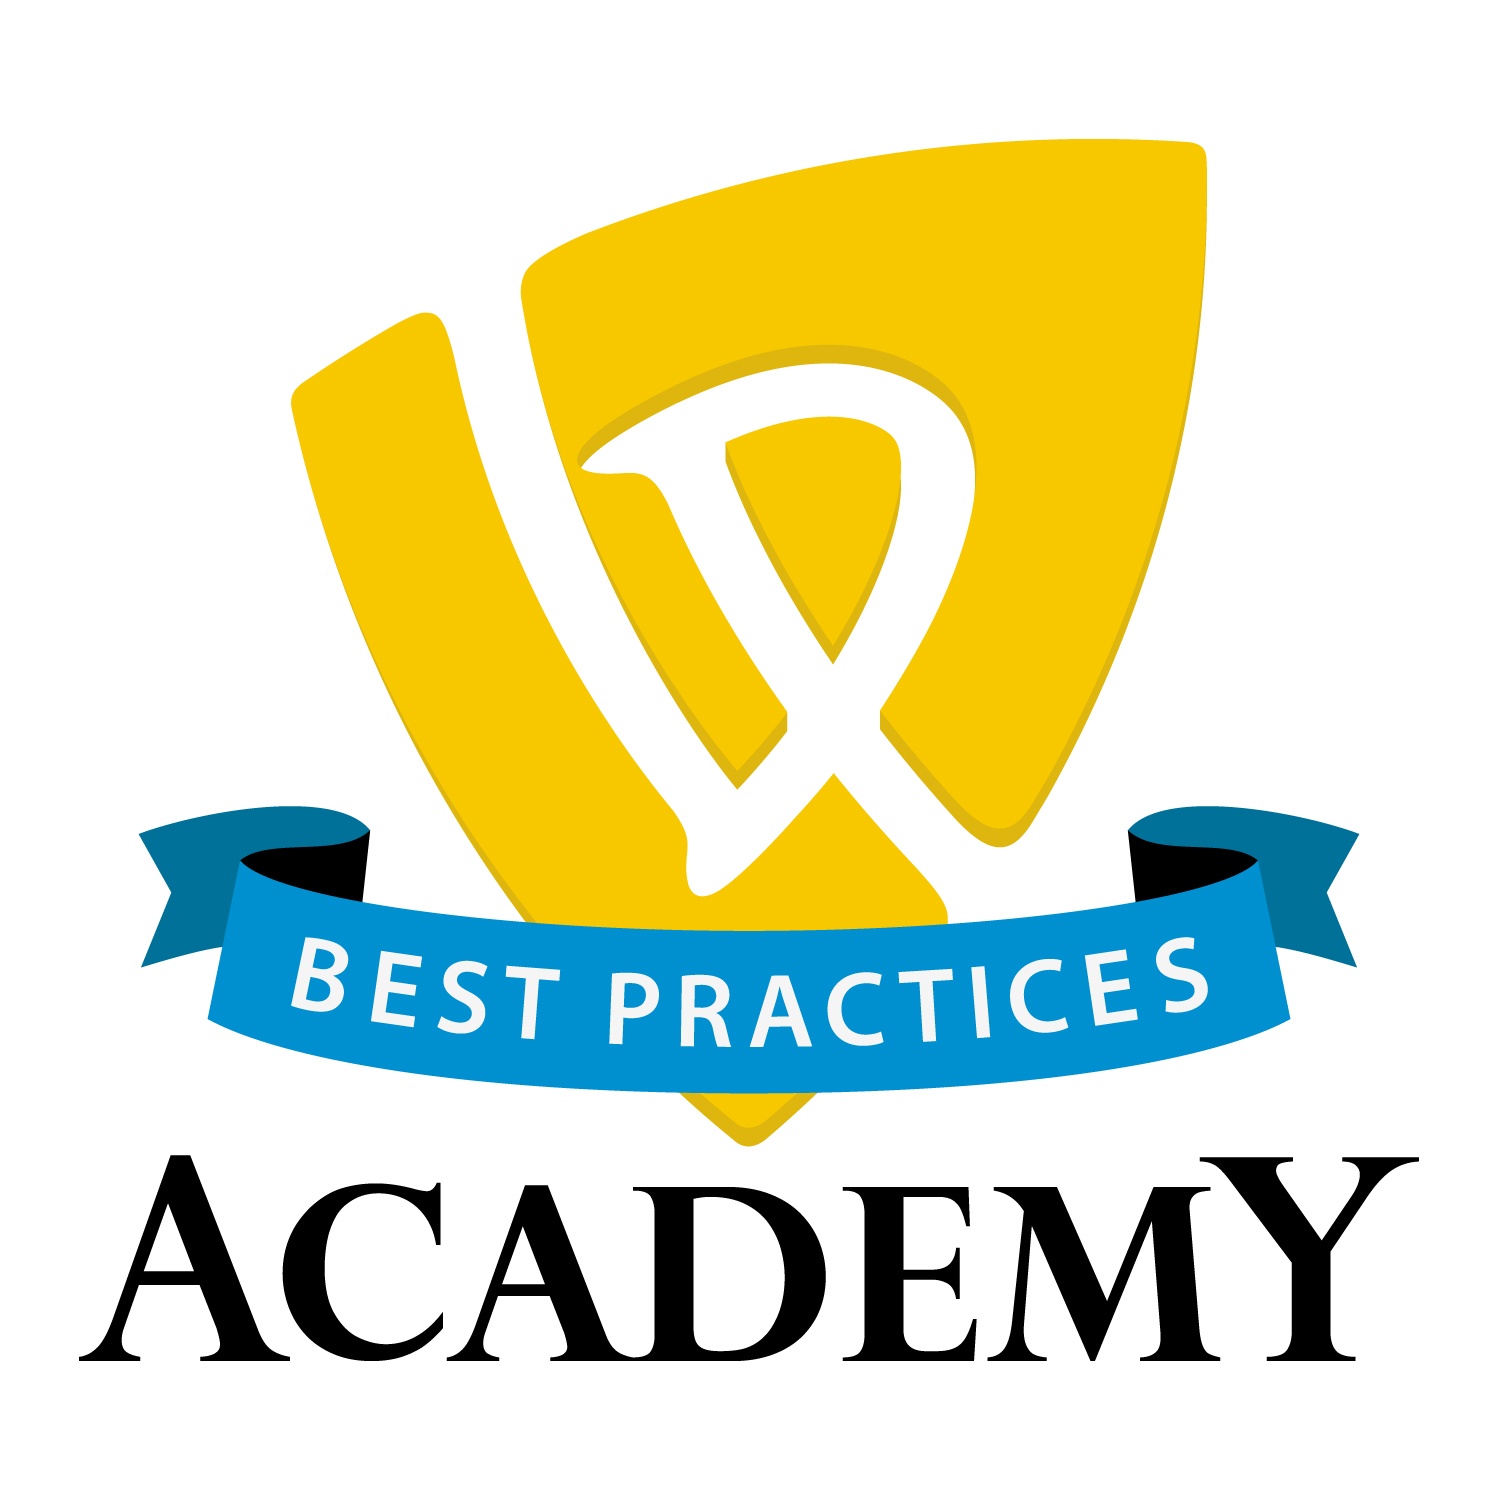 Best Practices Academy Logo Image